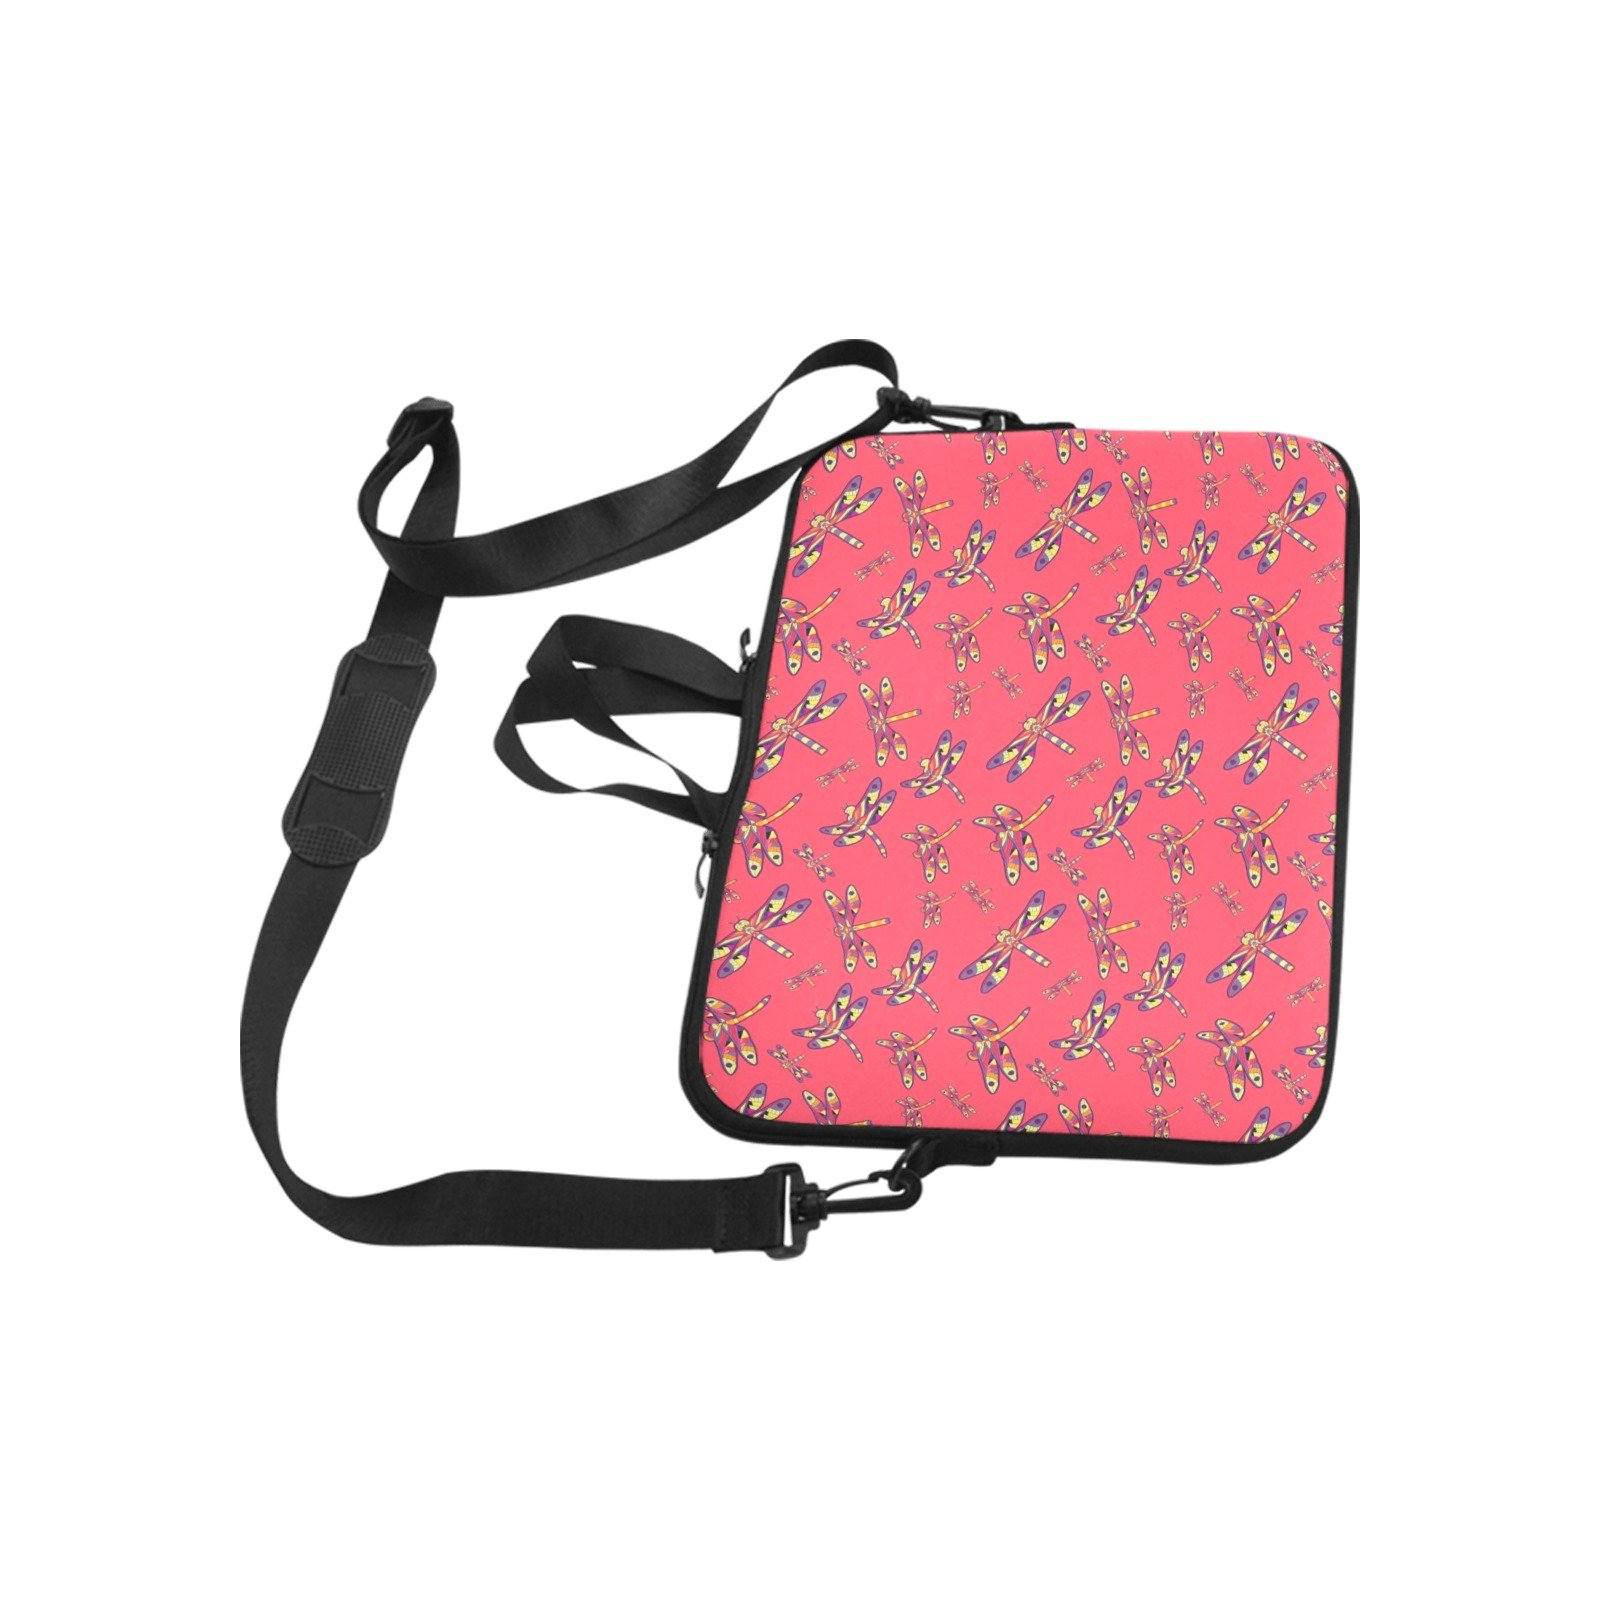 The Gathering Laptop Handbags 14" bag e-joyer 